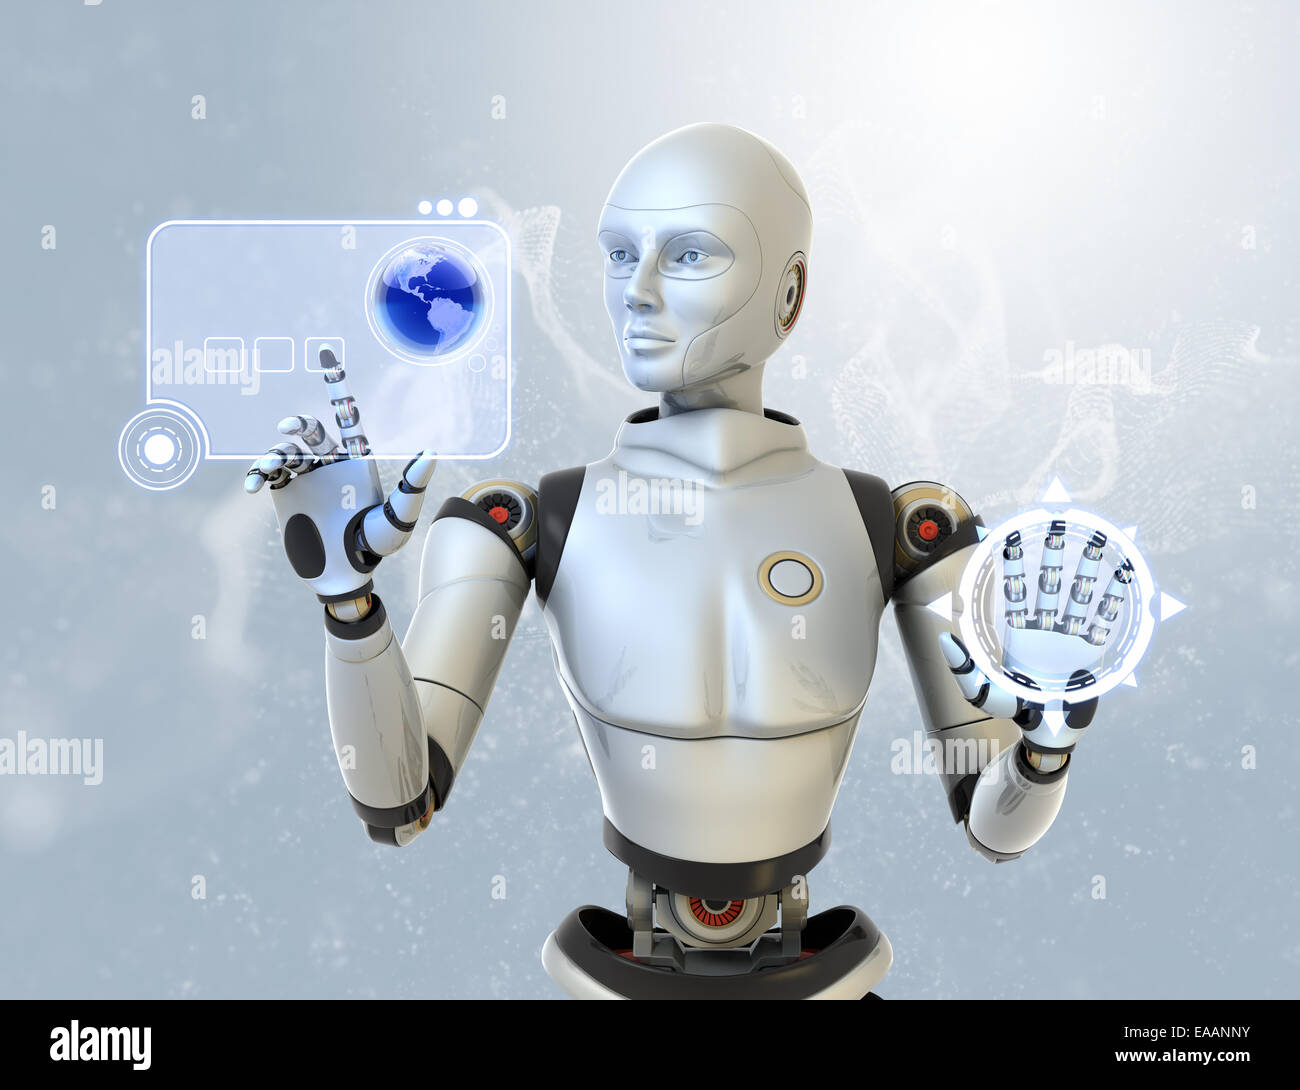 Robot using a futuristic interface Stock Photo